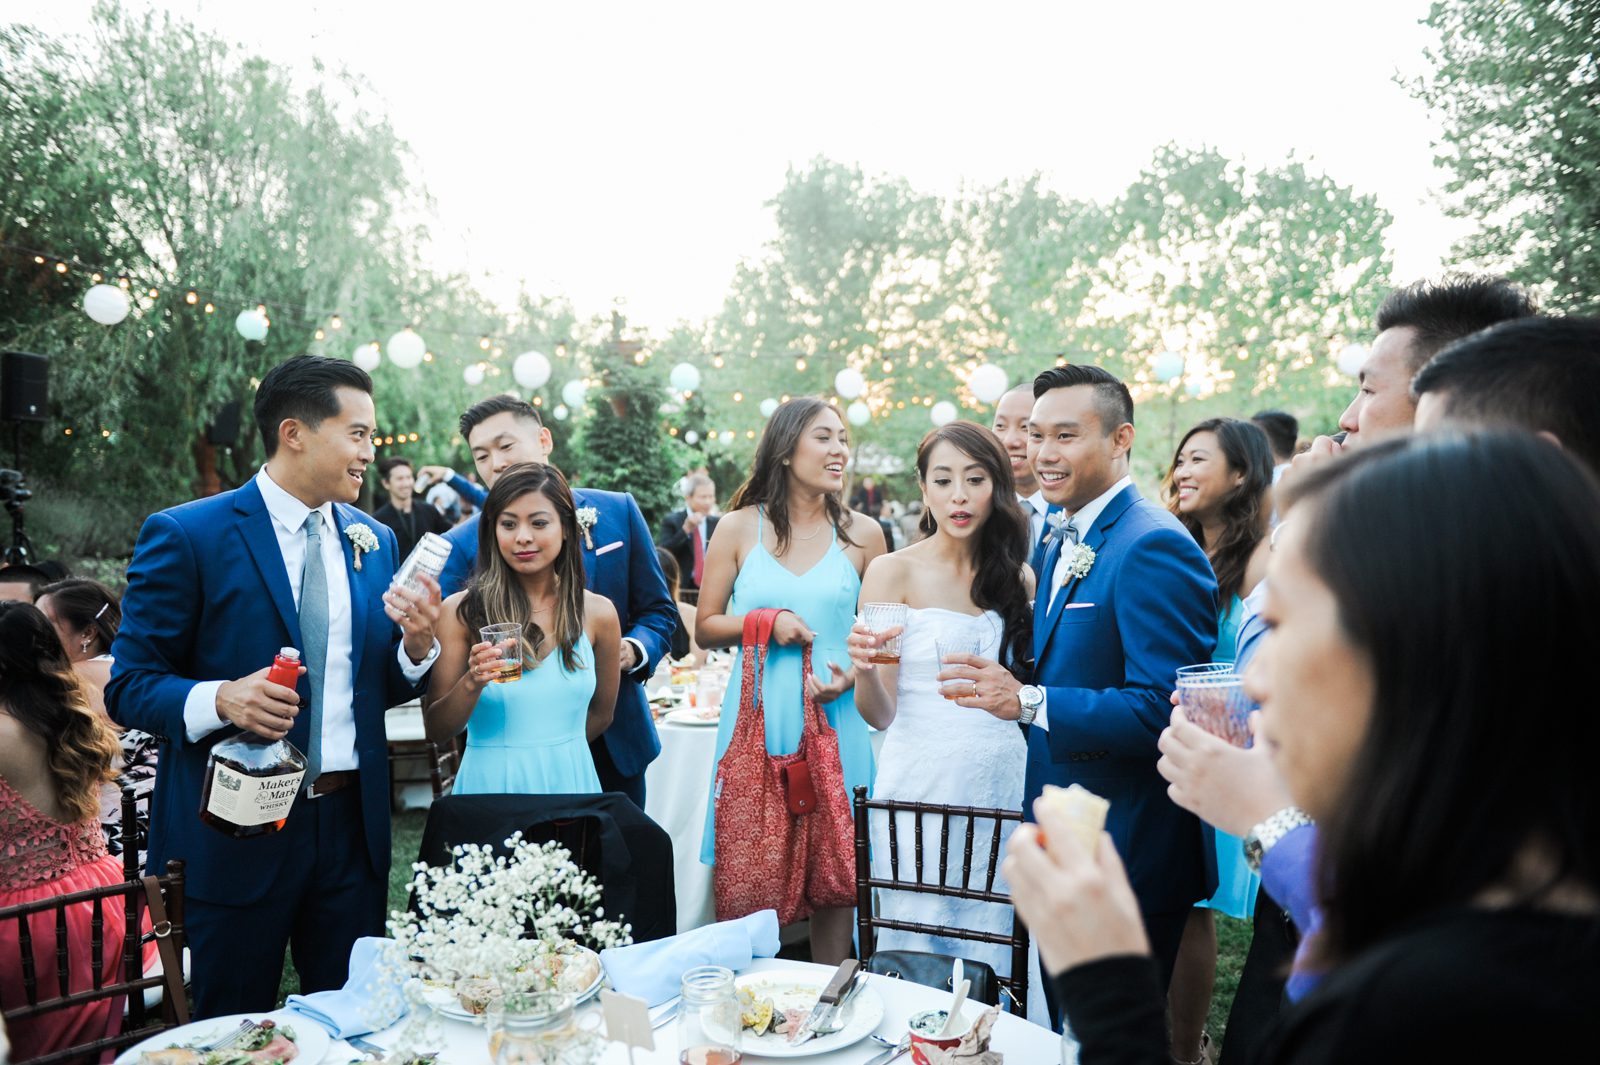 Friends celebrating love at Hartley Farm Wedding by San Luis Obispo Wedding photographer Yvonne Goll Photography